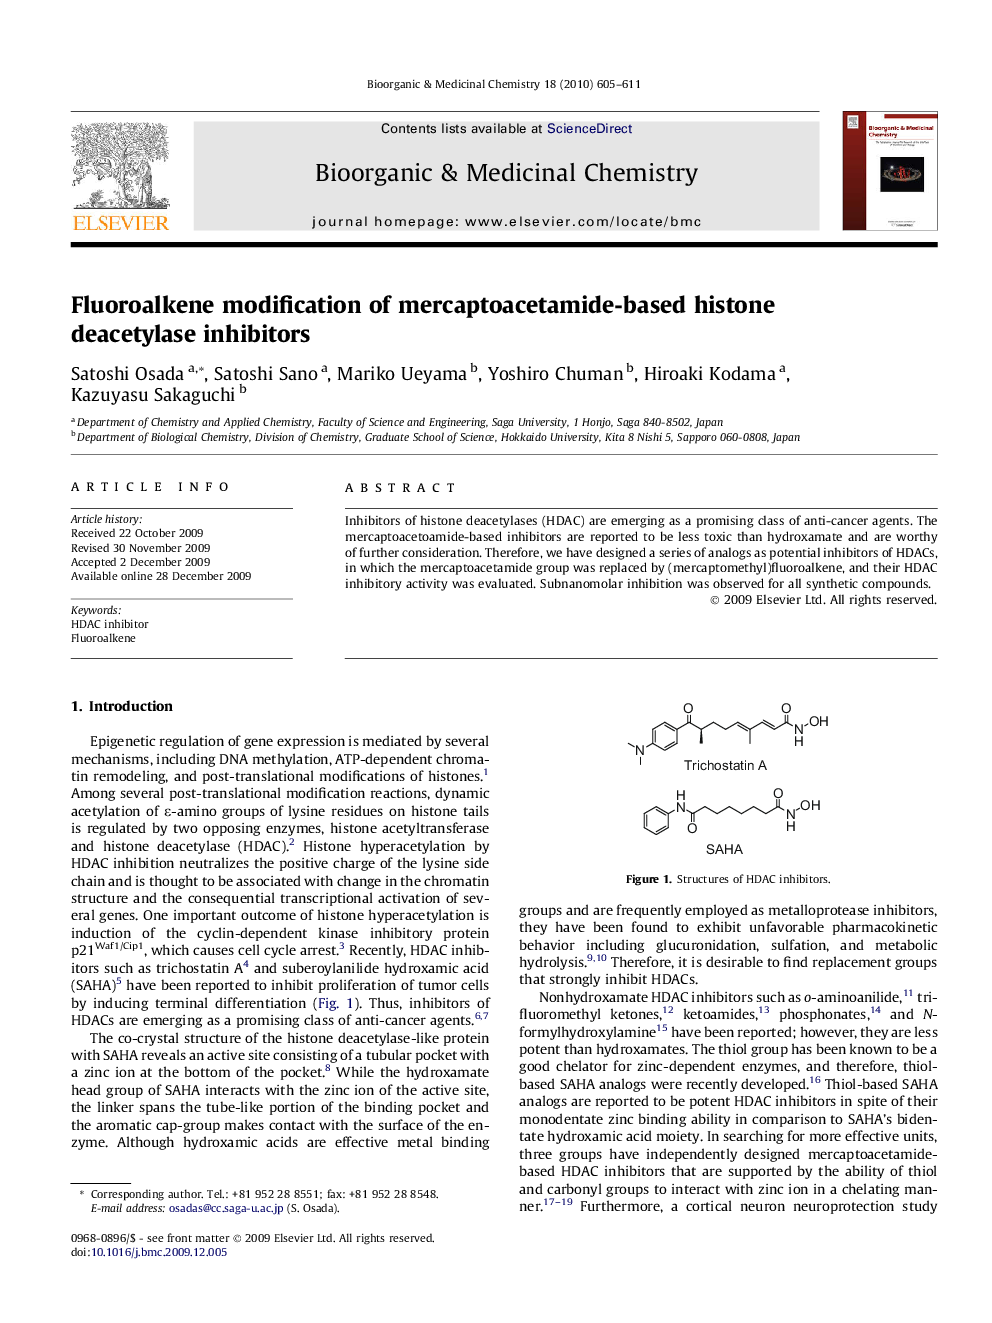 Fluoroalkene modification of mercaptoacetamide-based histone deacetylase inhibitors